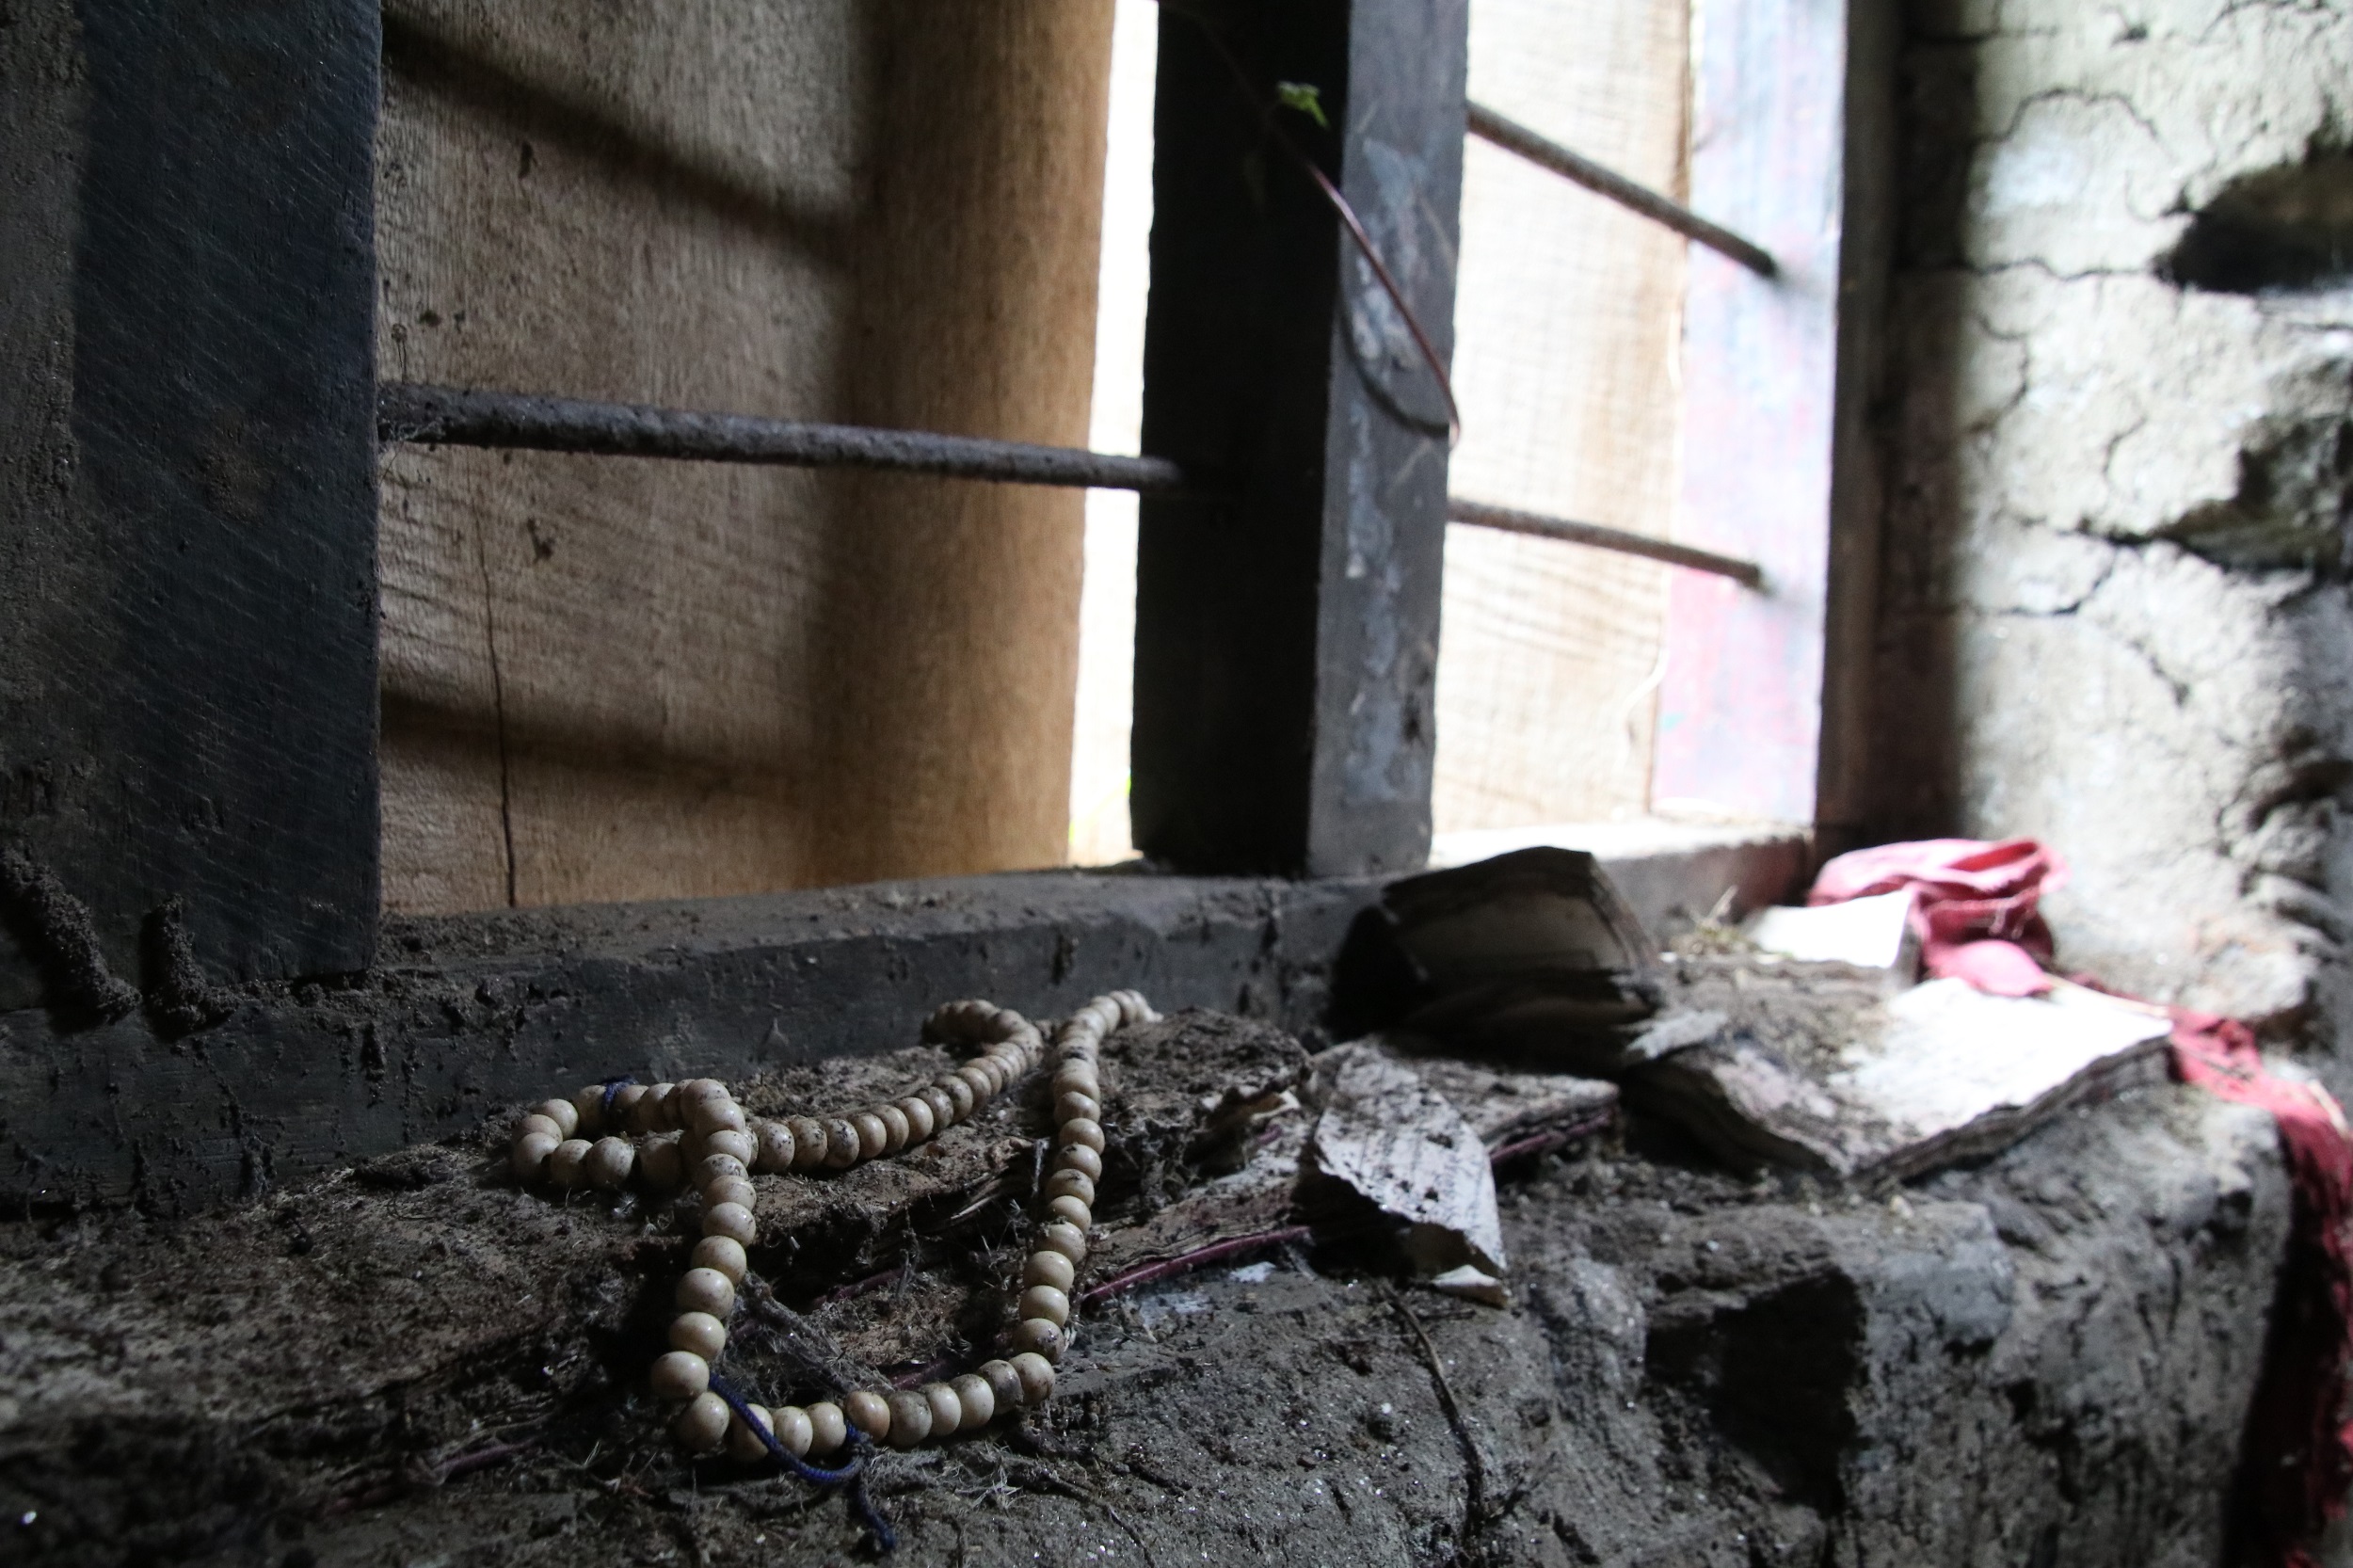 Prayer beads and prayer books near a window in an abandoned house in Shamdoley, Dagana district